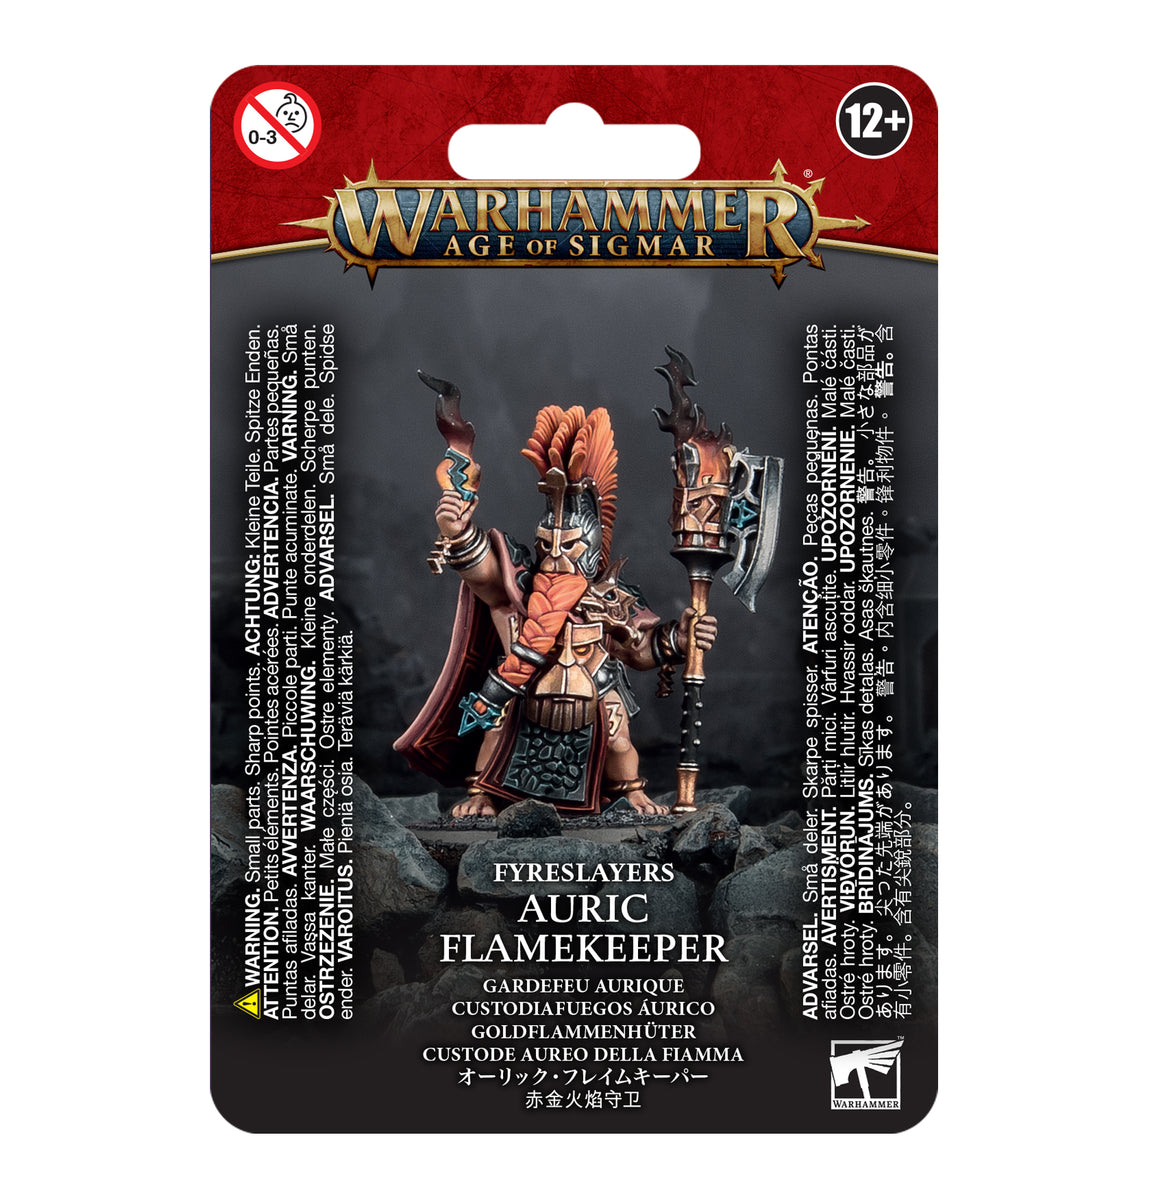 Warhammer Age of Sigmar :Fyrslayers Auric Flamekeeper